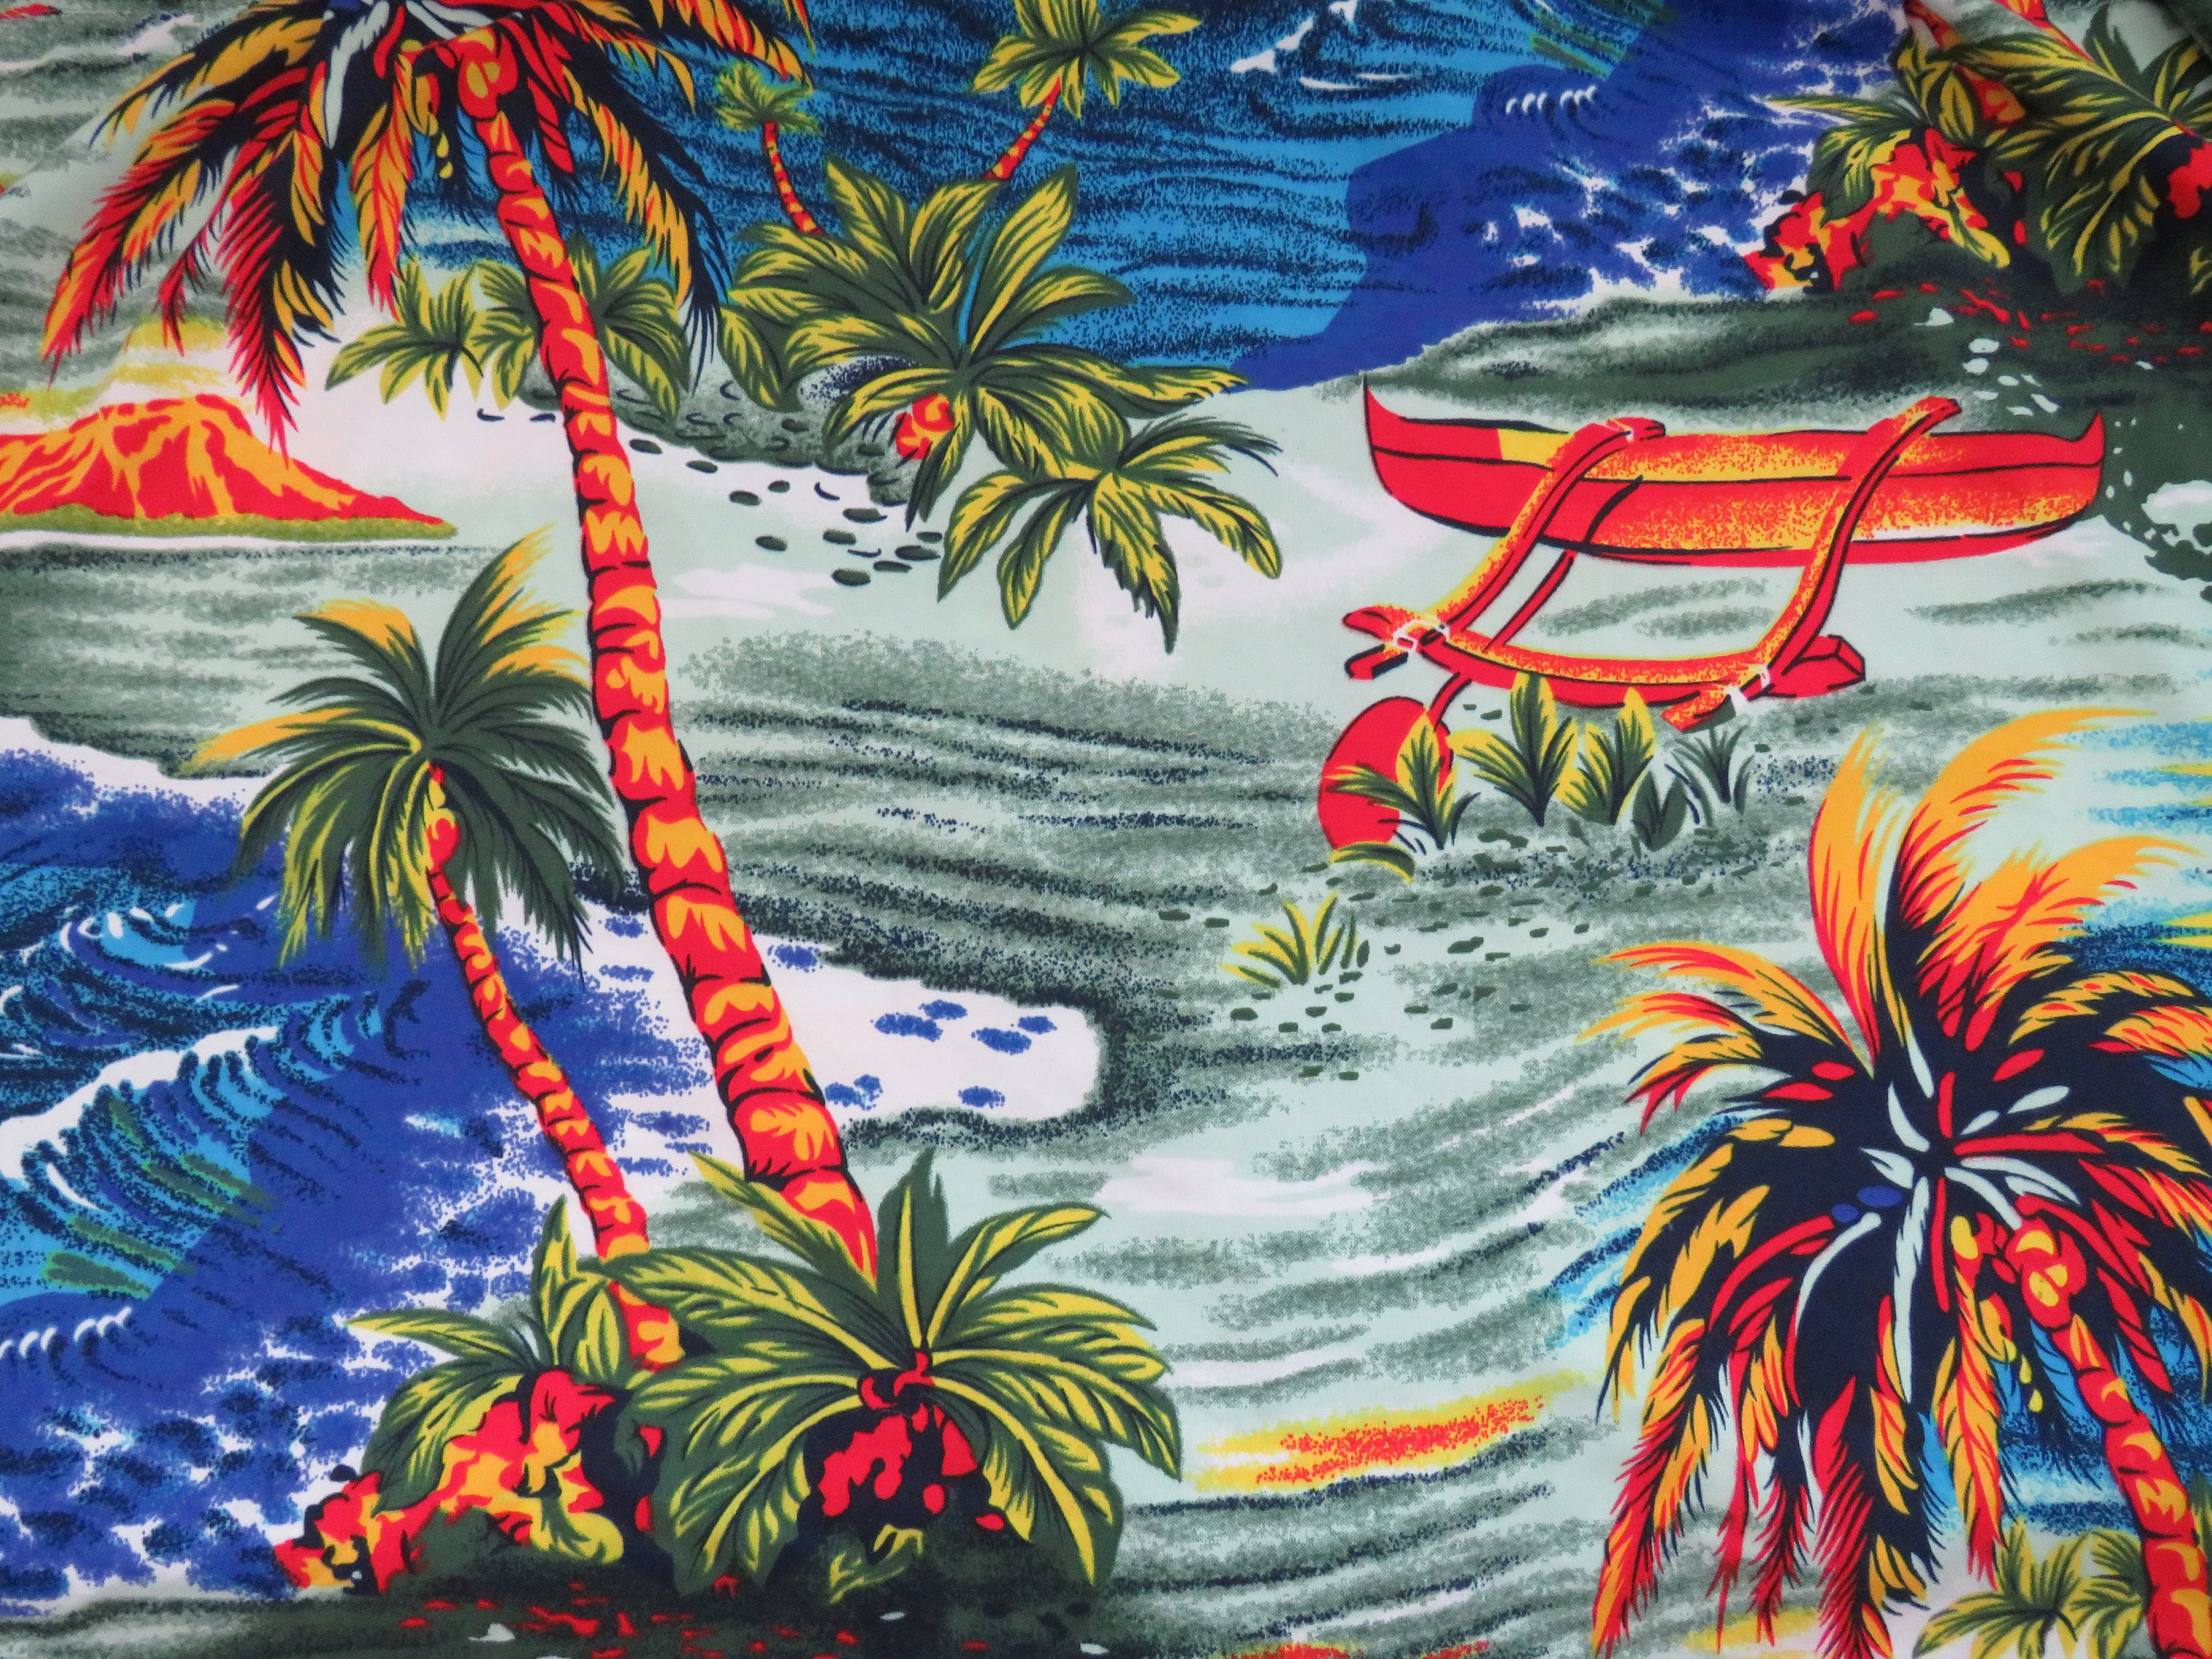 Mens Hawaiian Aloha Shirt by Hawaiian Vintage Collection - Etsy